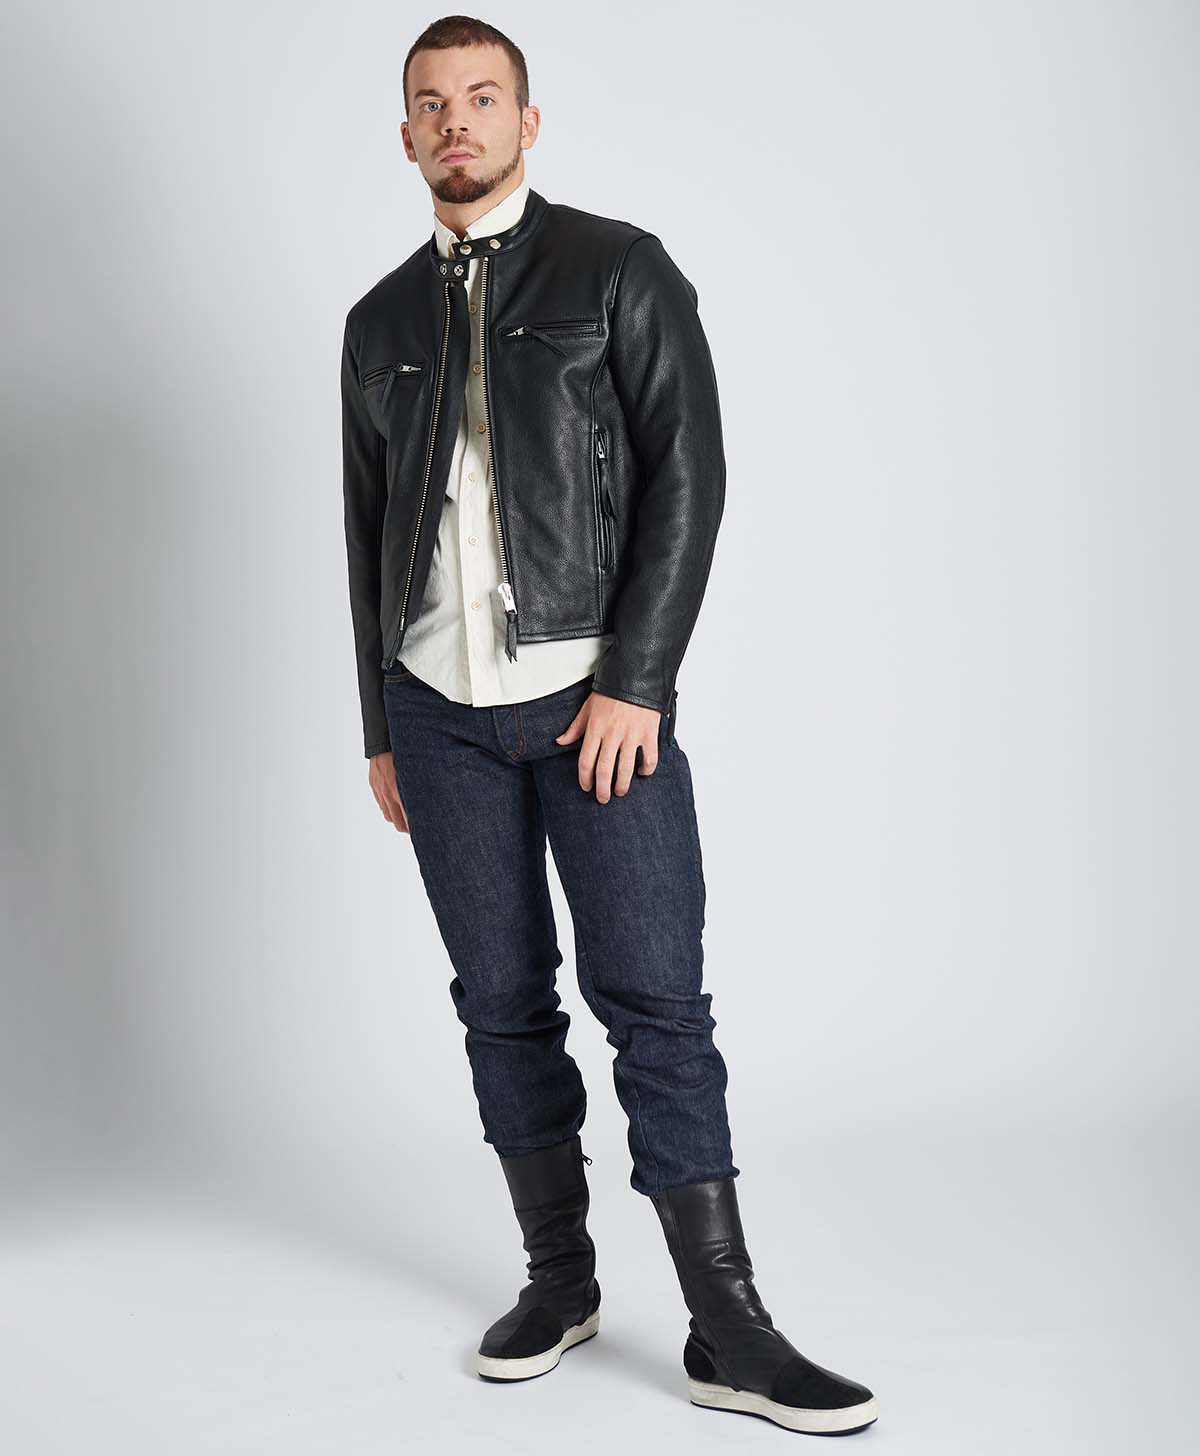 Leather jacket | Kadoya official online shop | MVS-F / Black